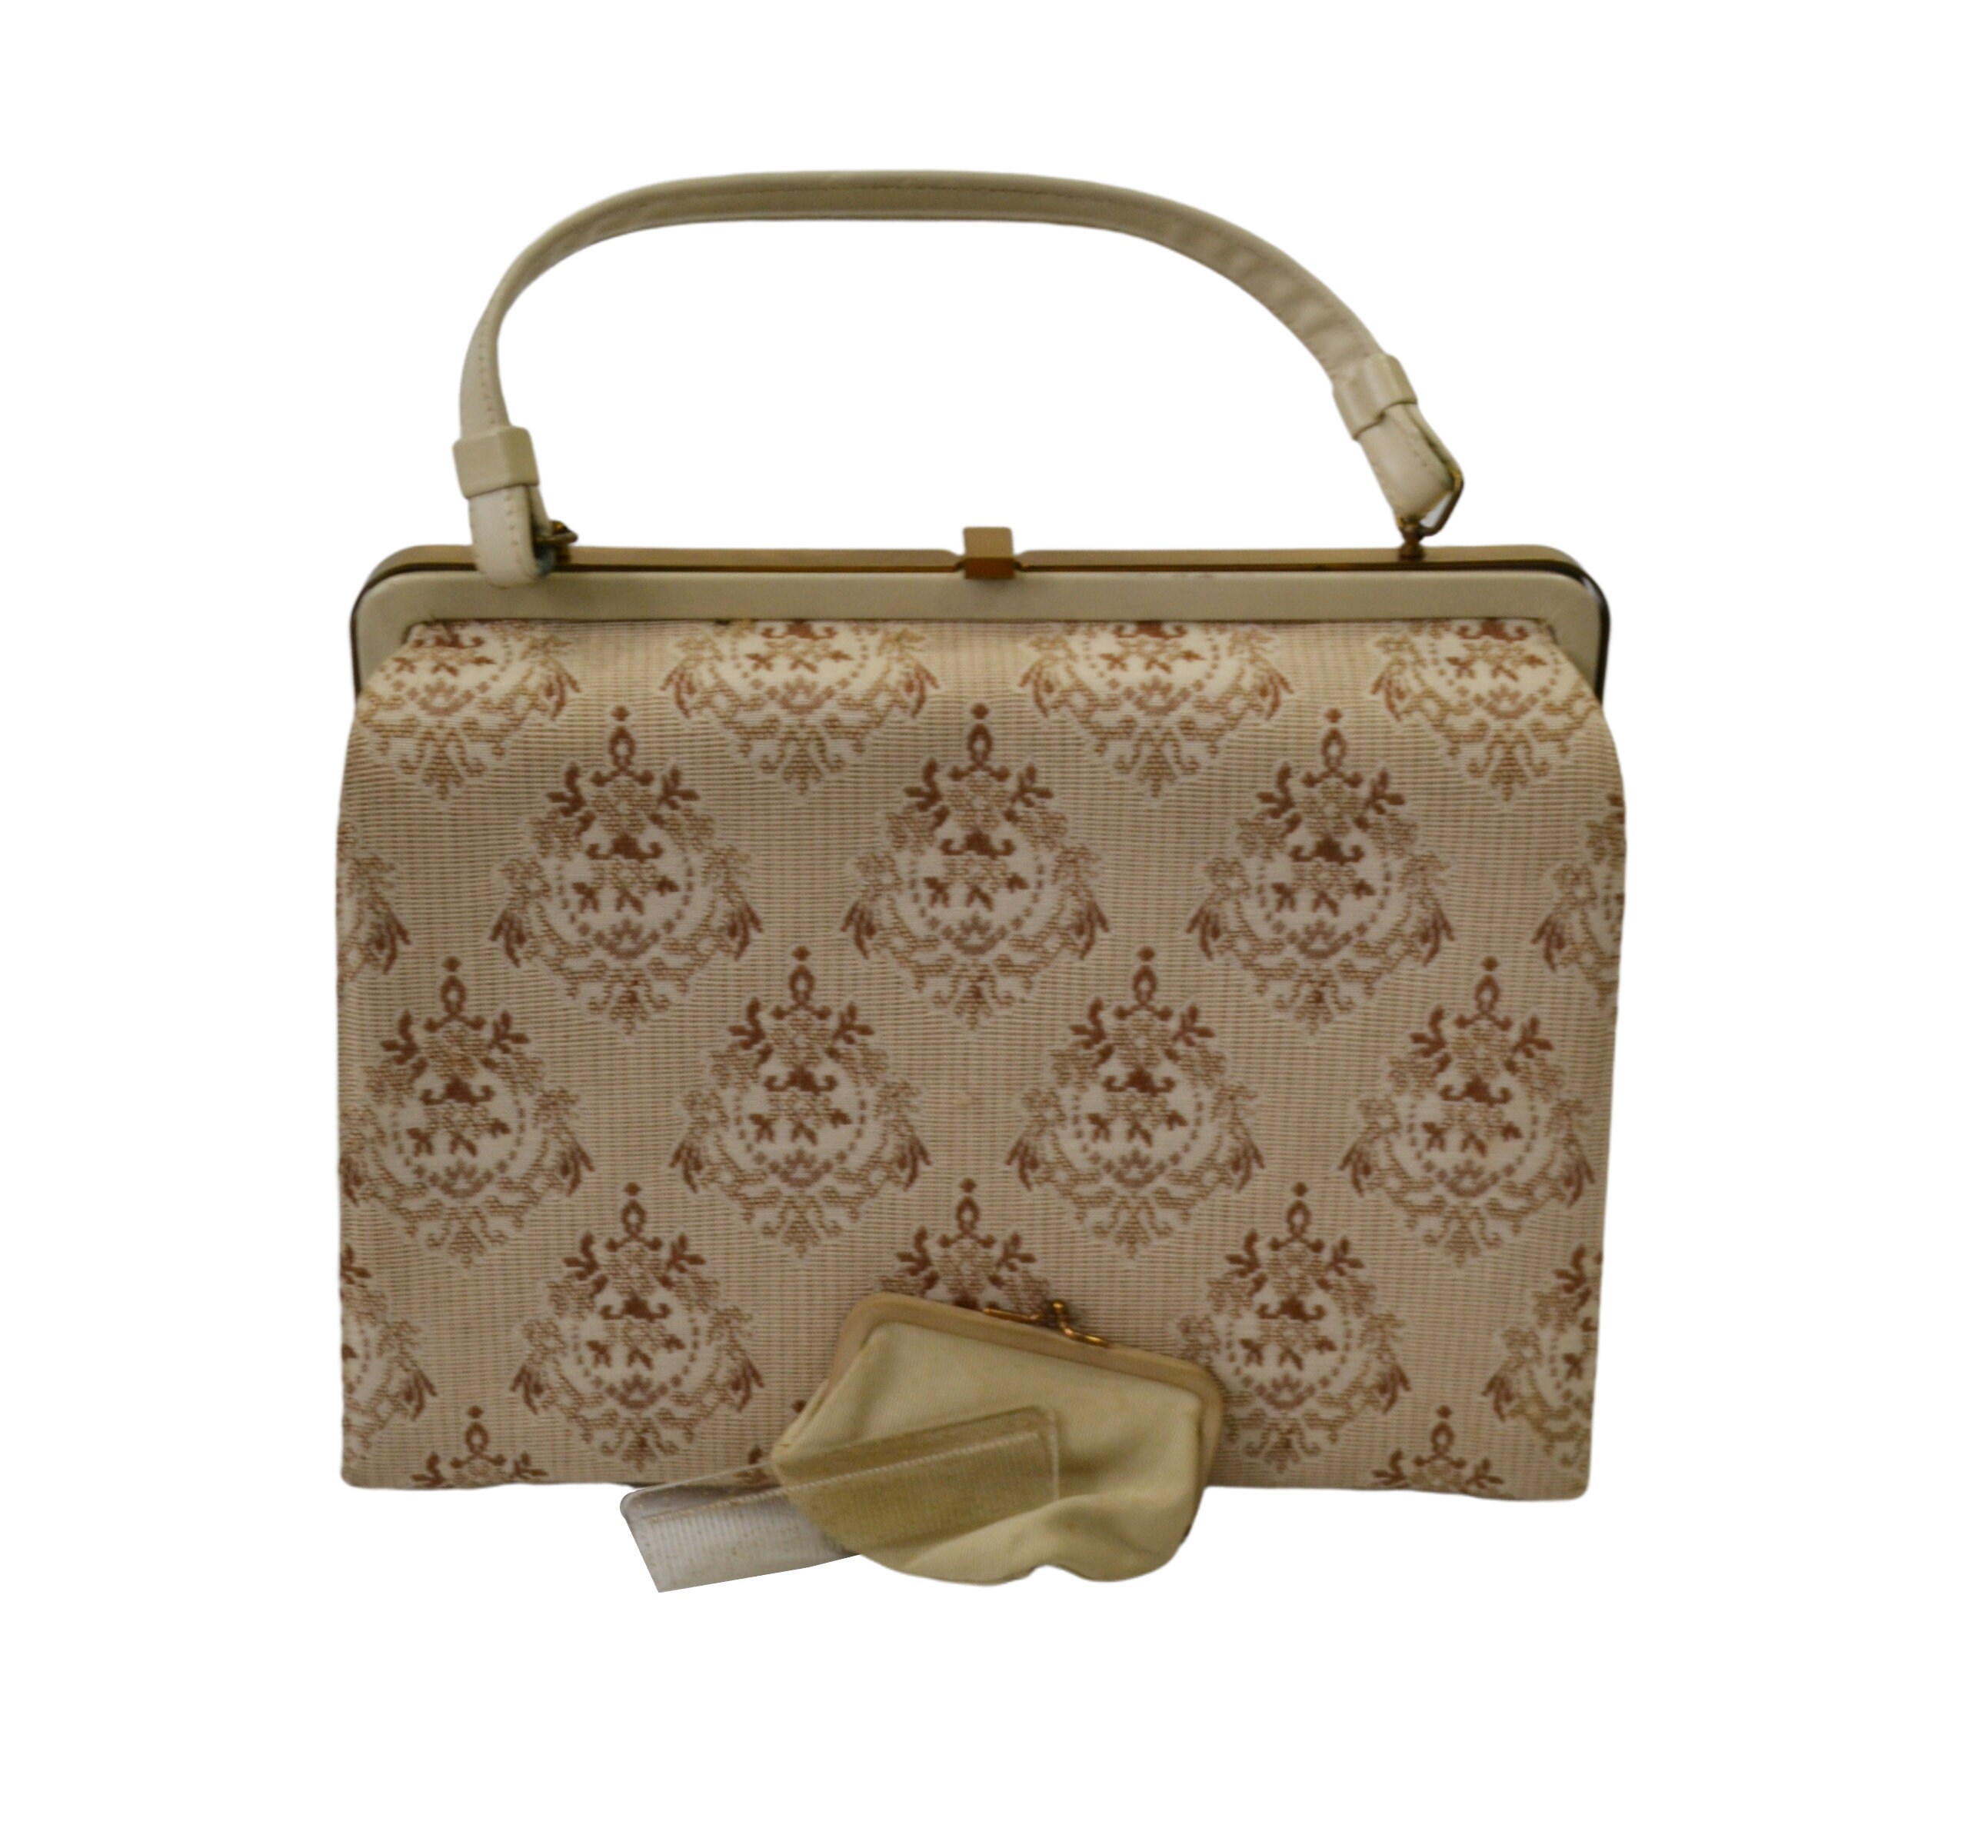 Lewis Vintage 1950s Handbag